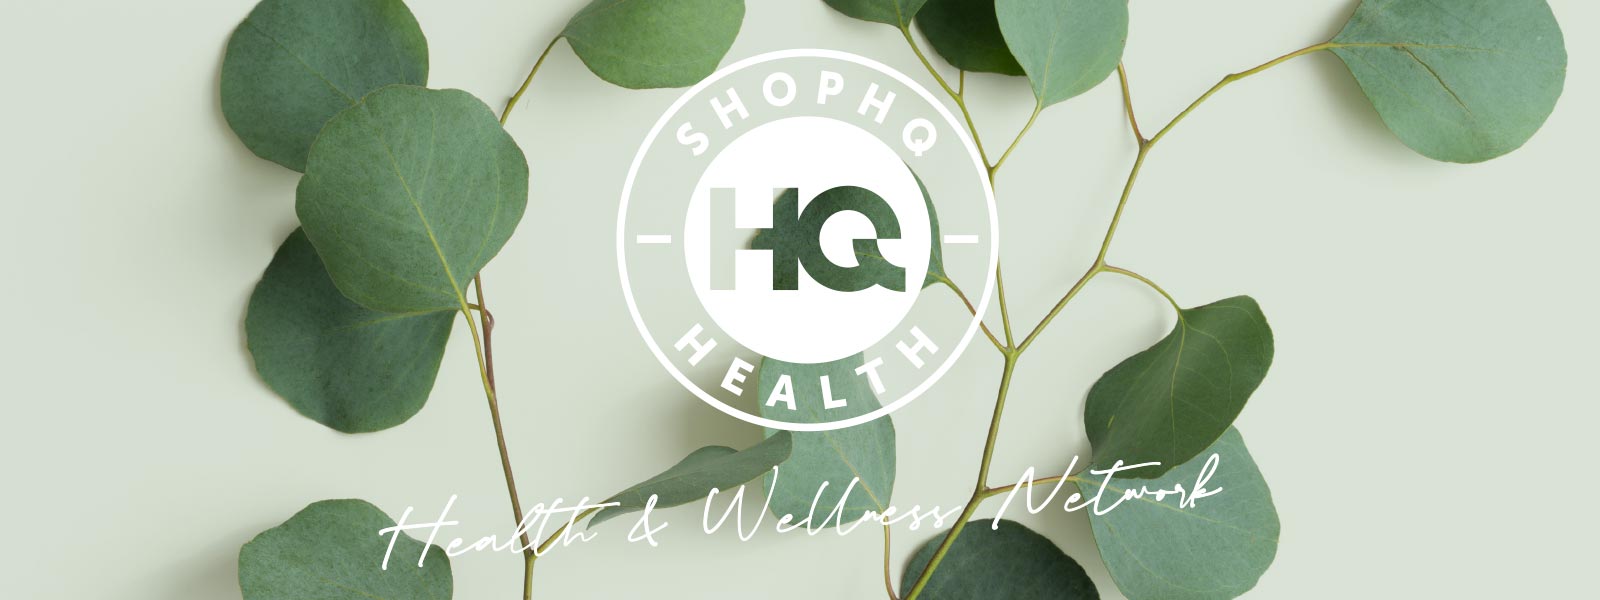 Welcome to Health & Wellness - ShopHQ Health